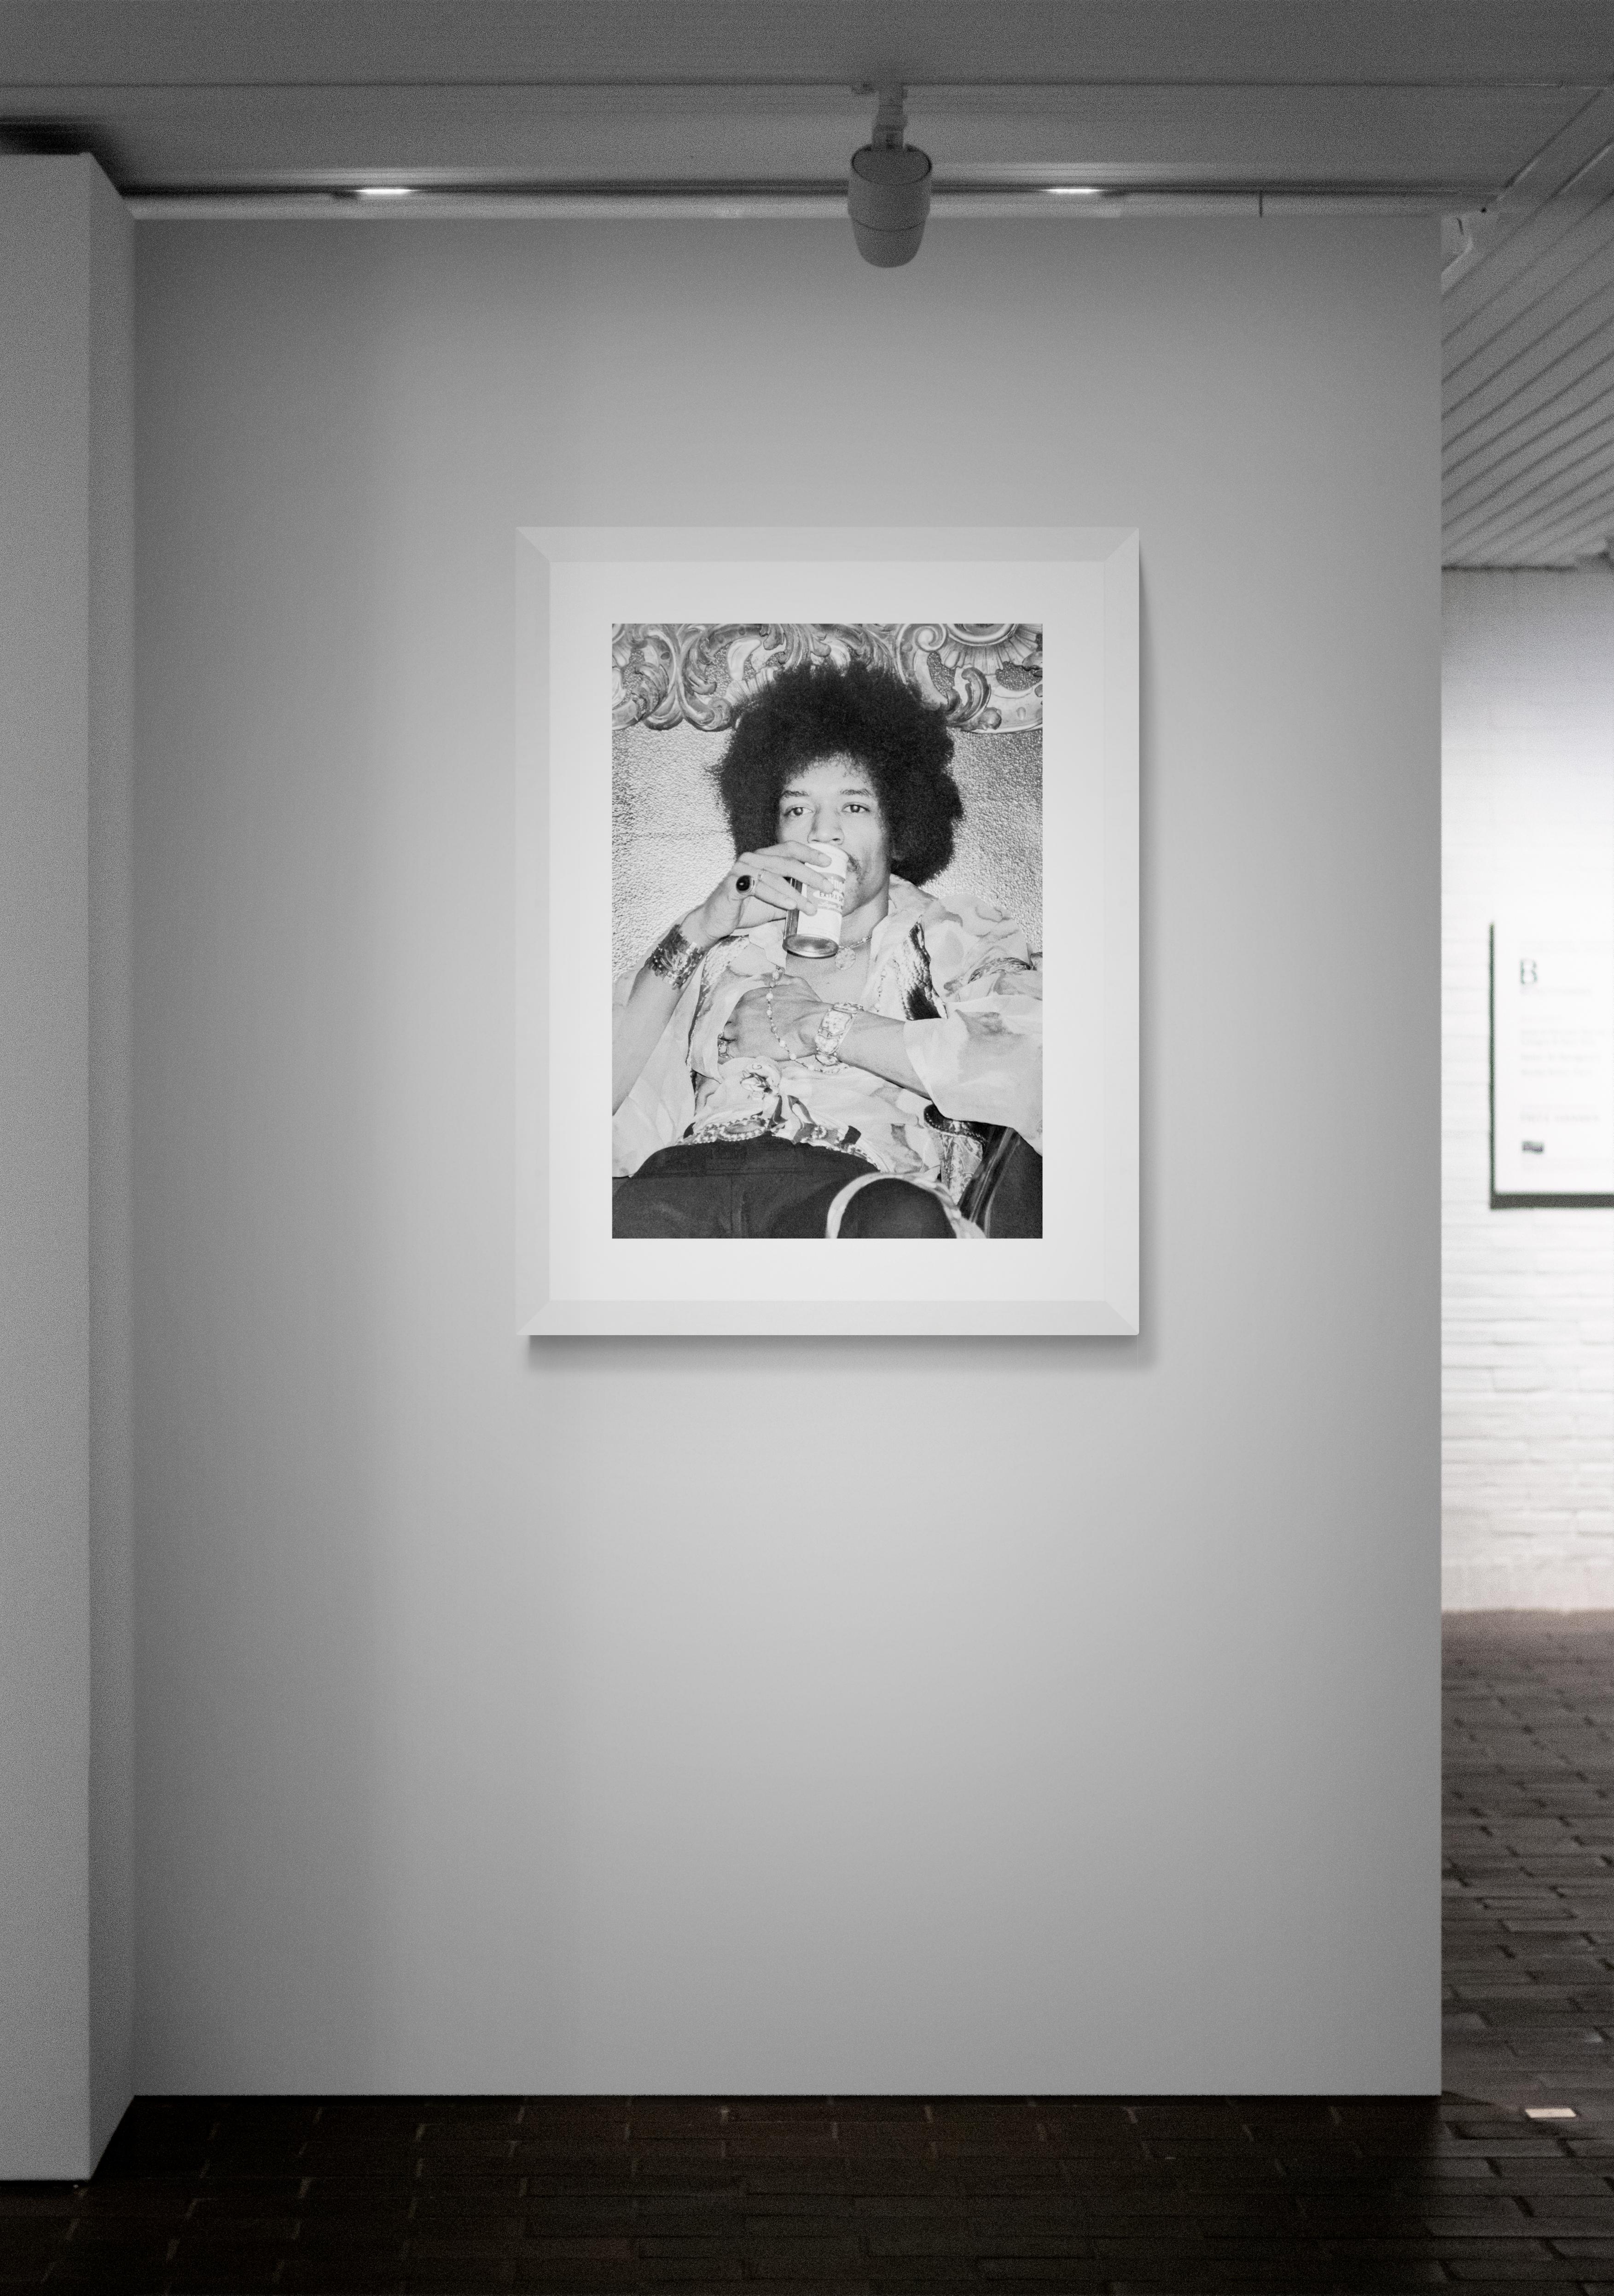 Jimi Hendrix, Portrait, Rock Photography Print by Jeffrey Myer - Gray Black and White Photograph by Jeffrey Mayer